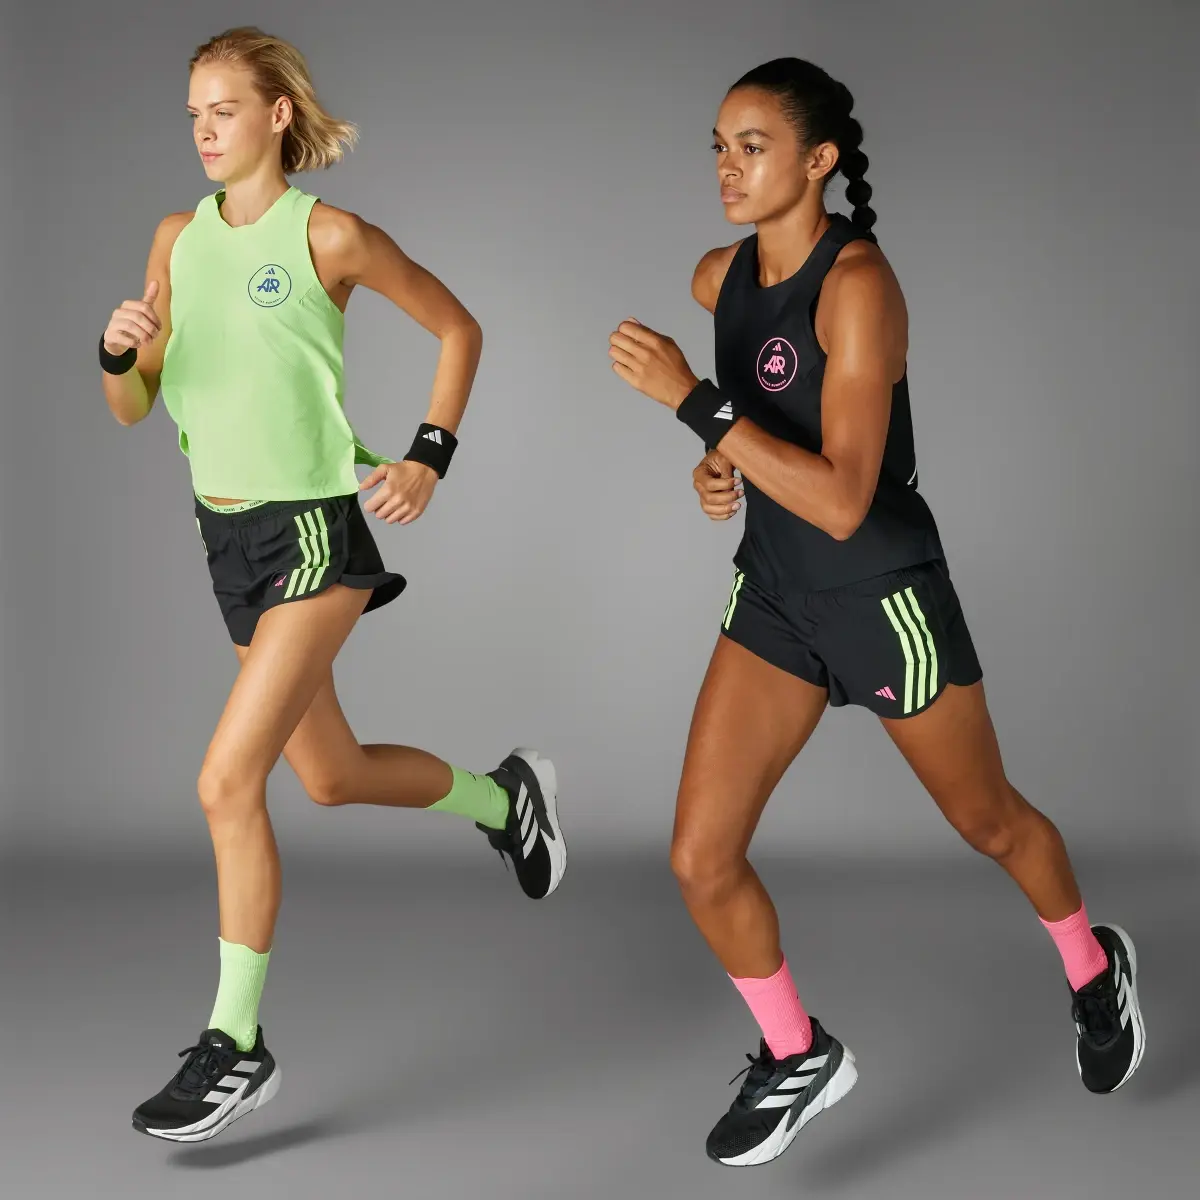 Adidas Own the Run adidas Runners Tank Top. 3